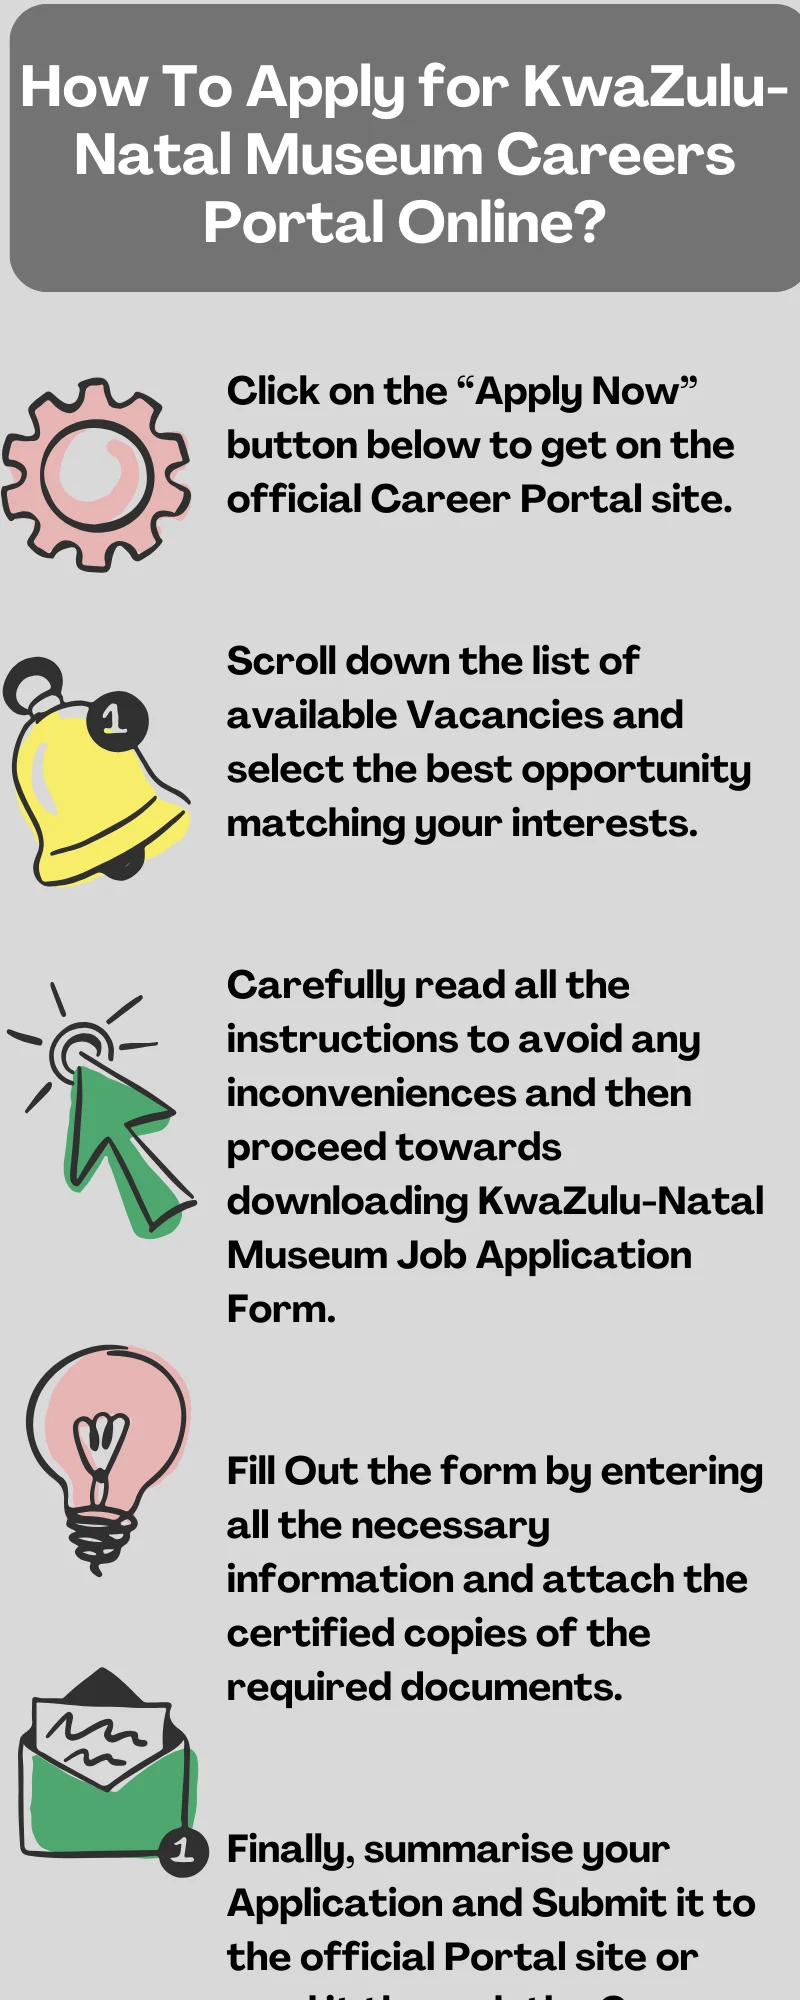 How To Apply for KwaZulu-Natal Museum Careers Portal Online?